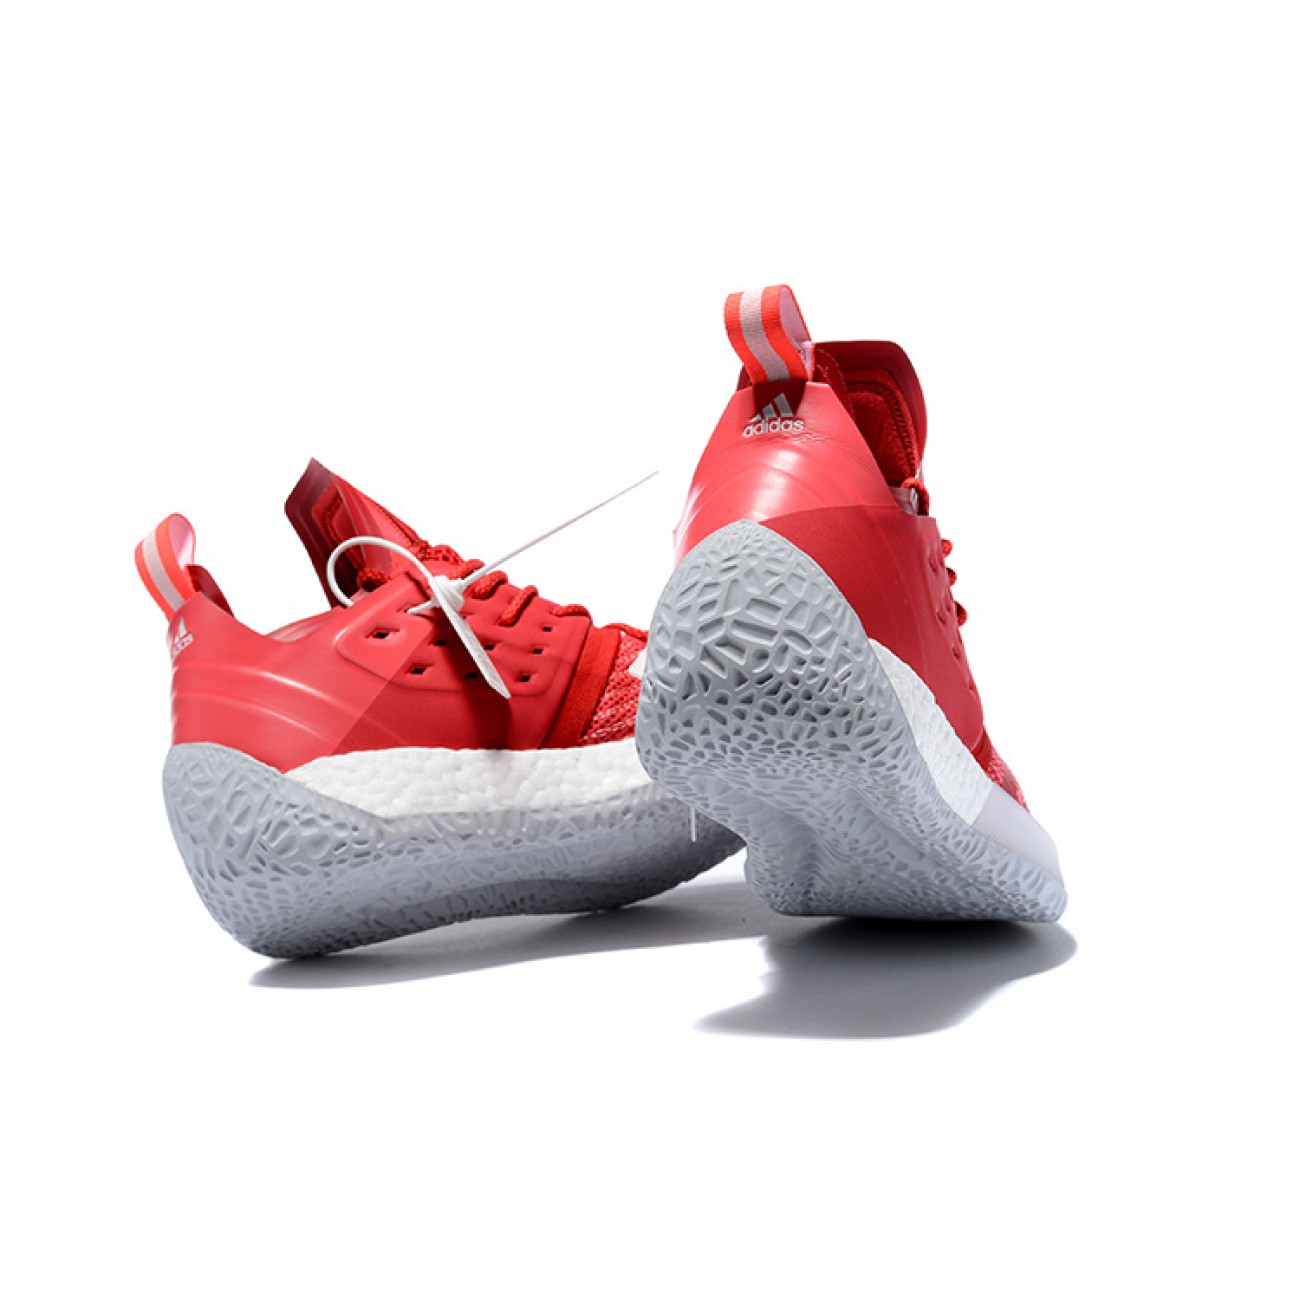 Adidas Harden Vol.2 "Pioneer" Red/White